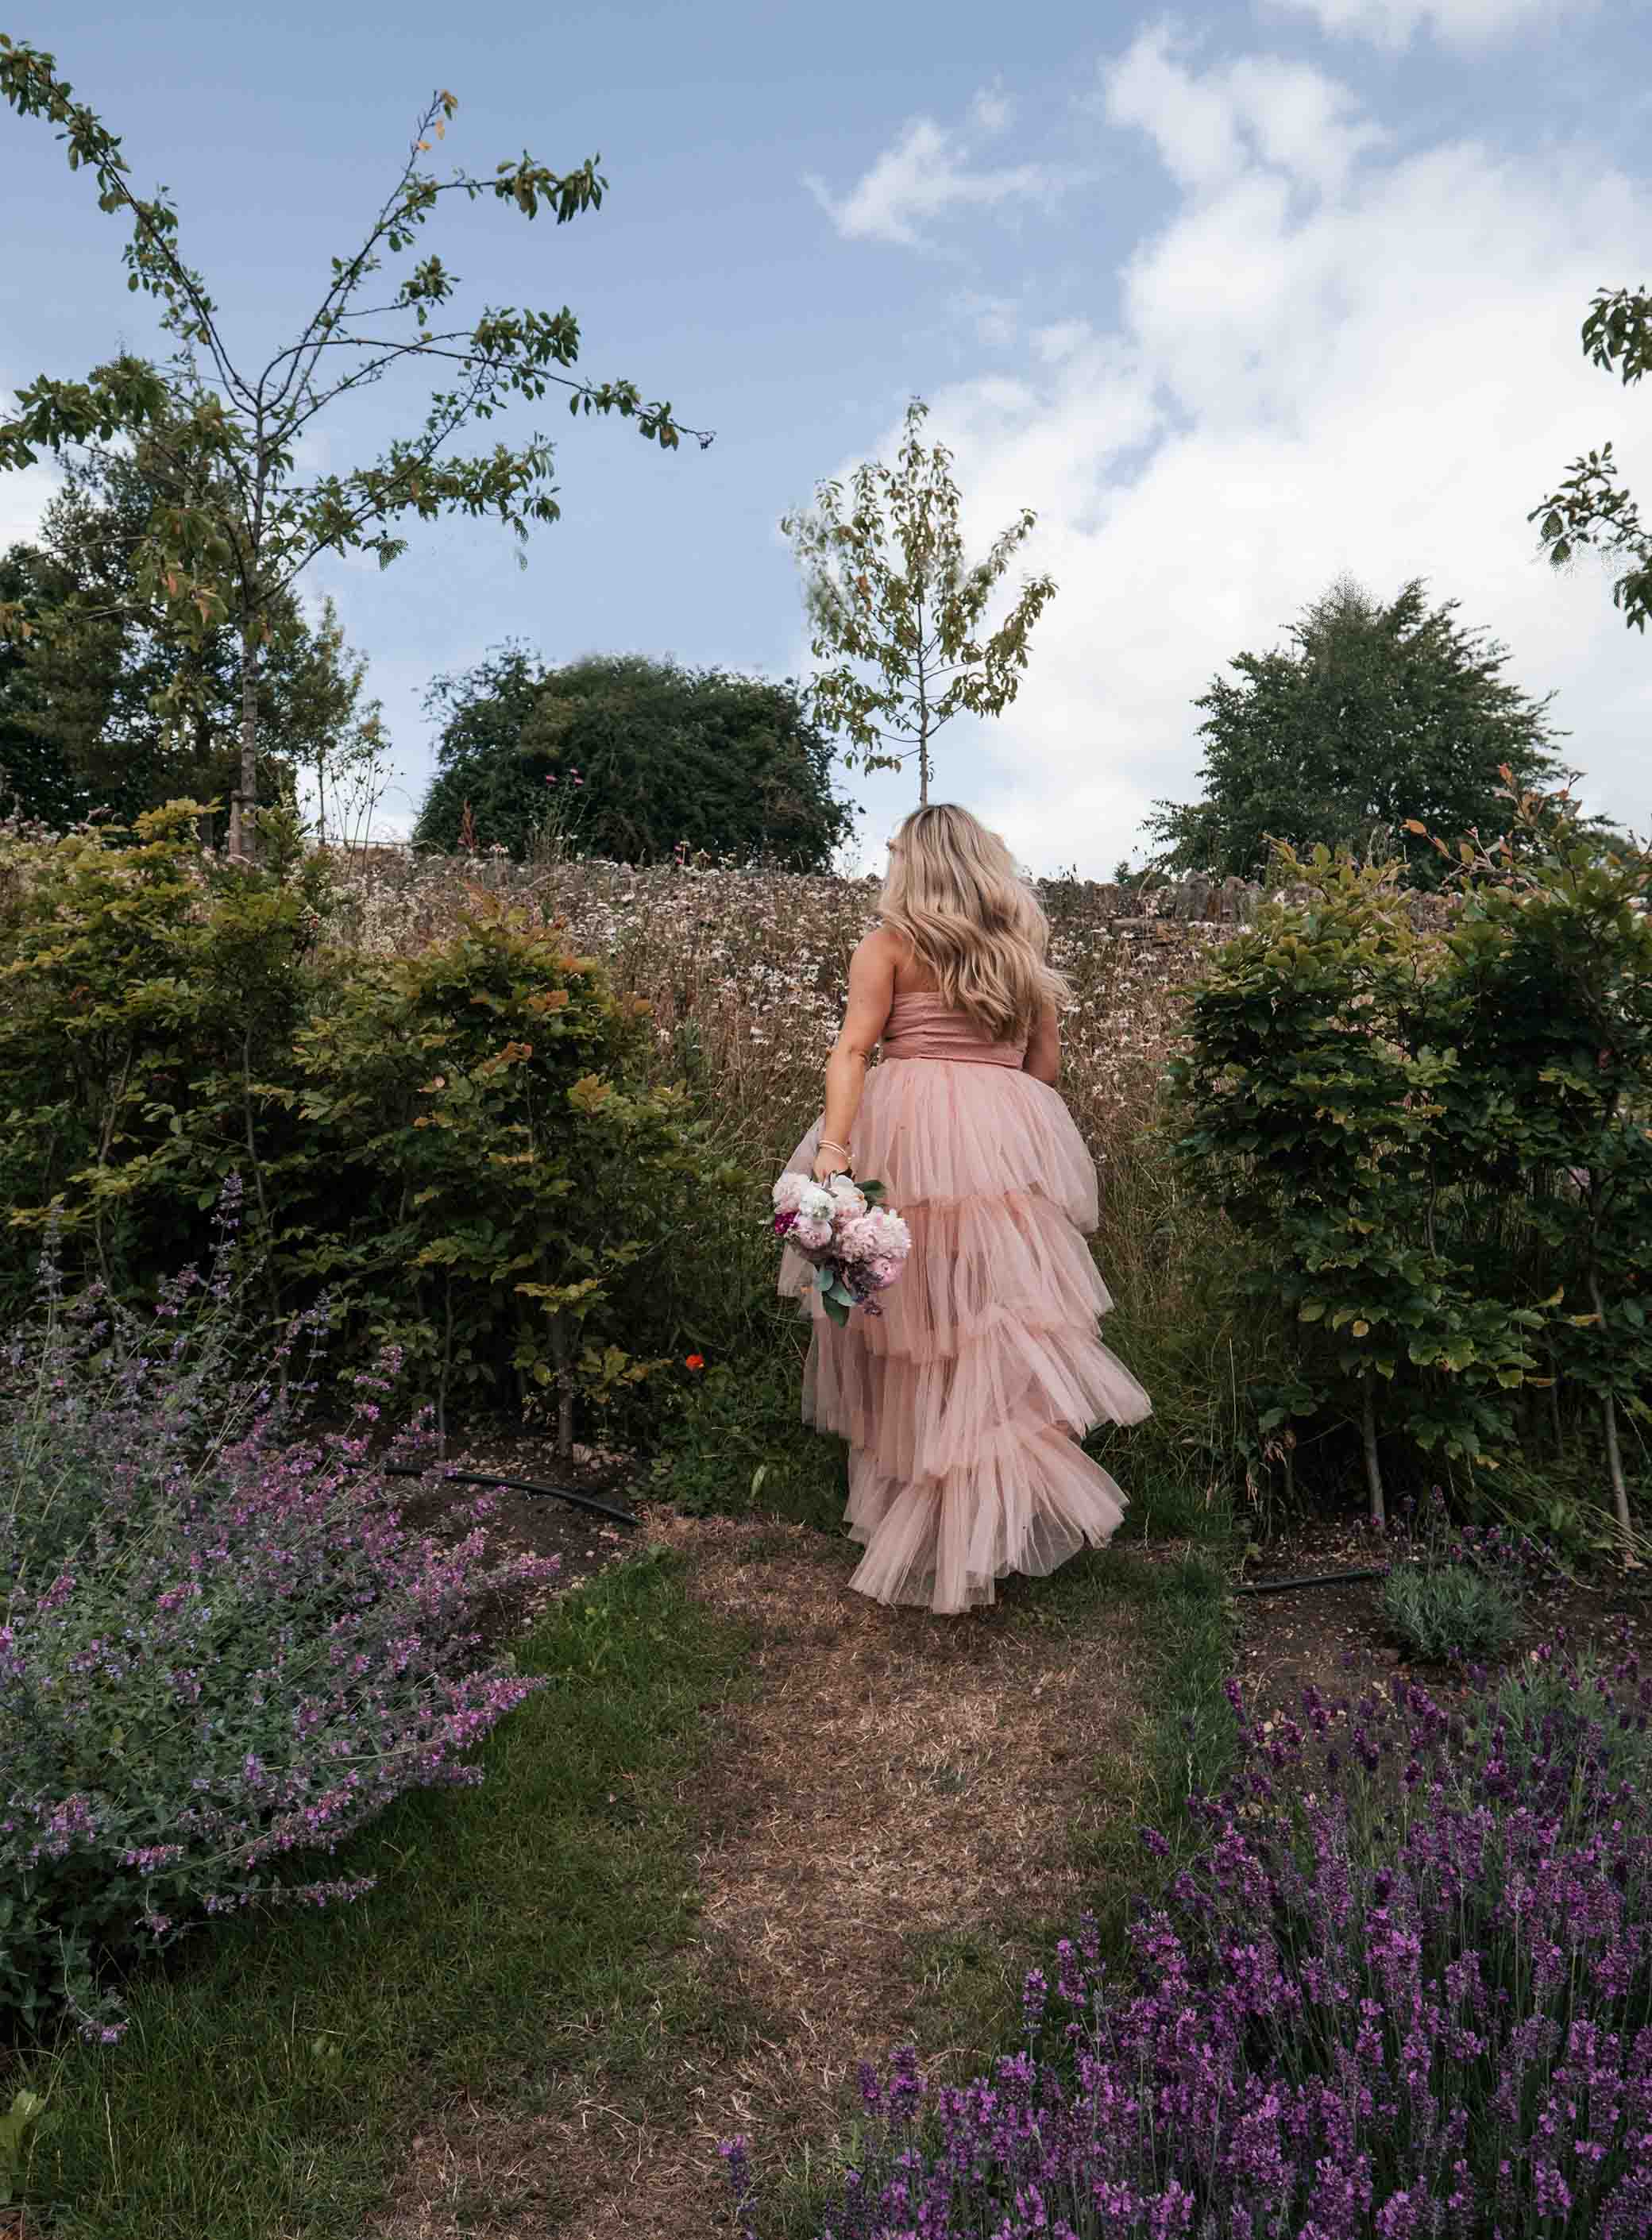 A lady enswathed in a pink dress walking through lavender gardens